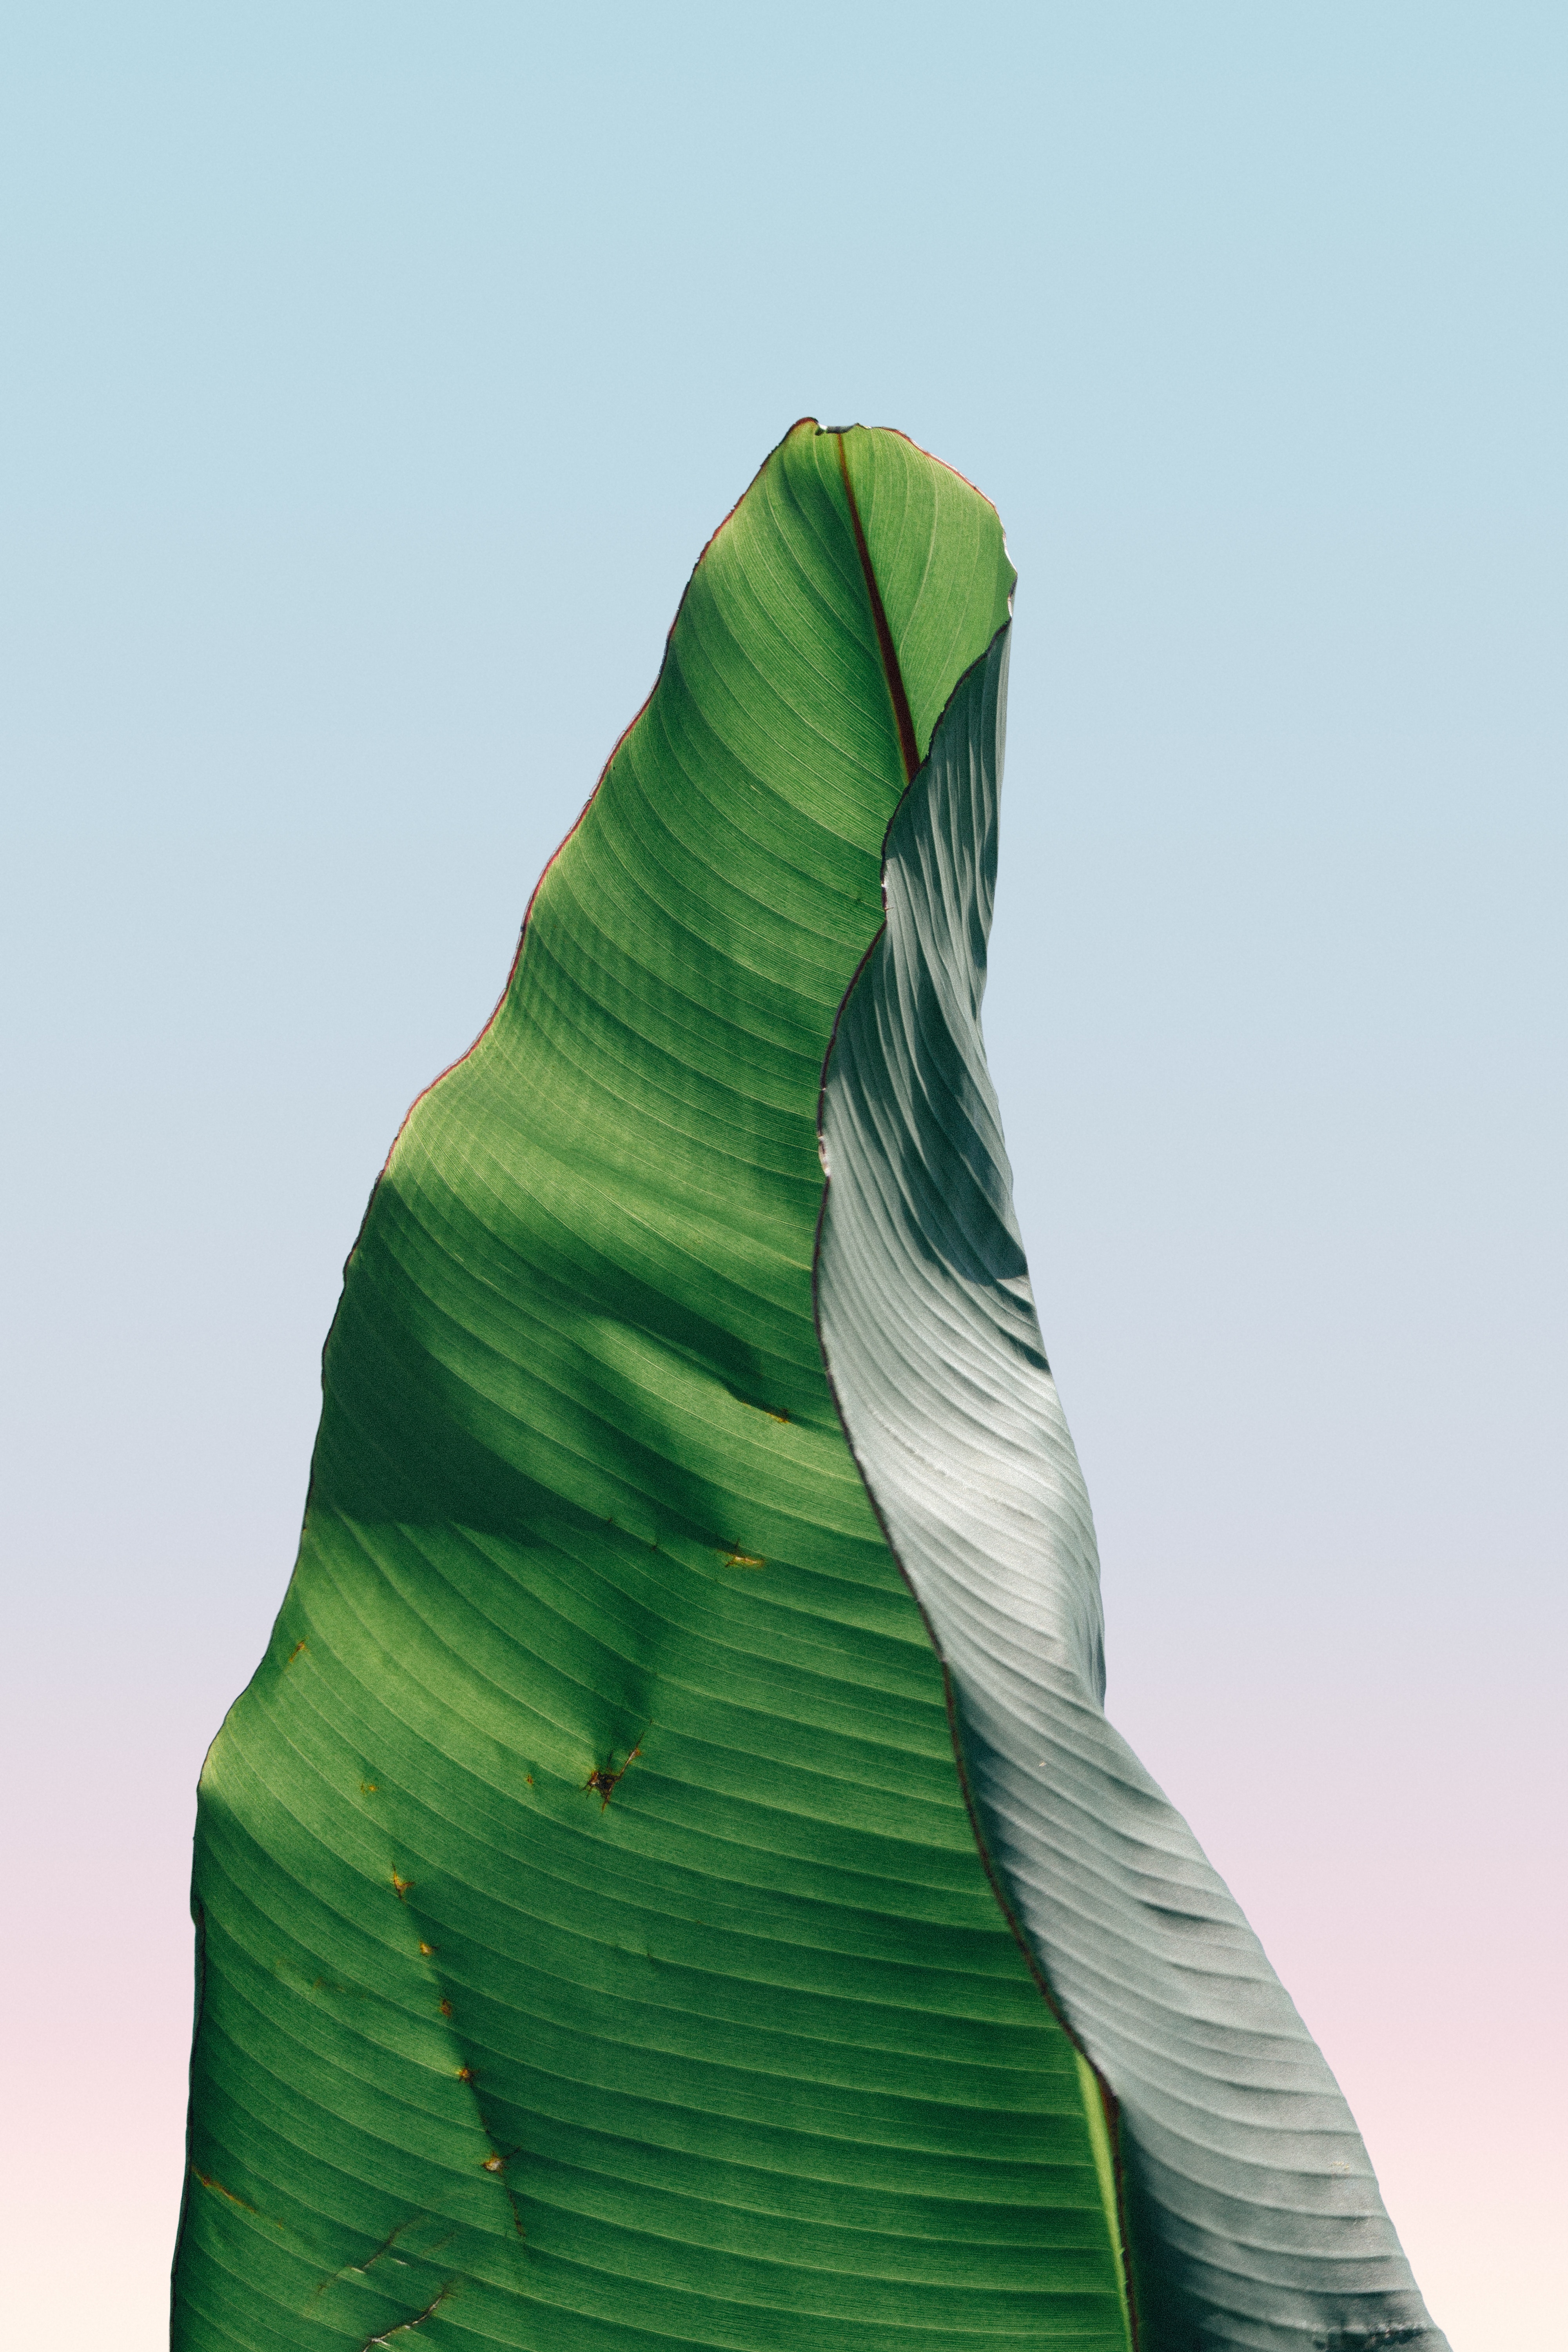 Single palm leaf on a light background